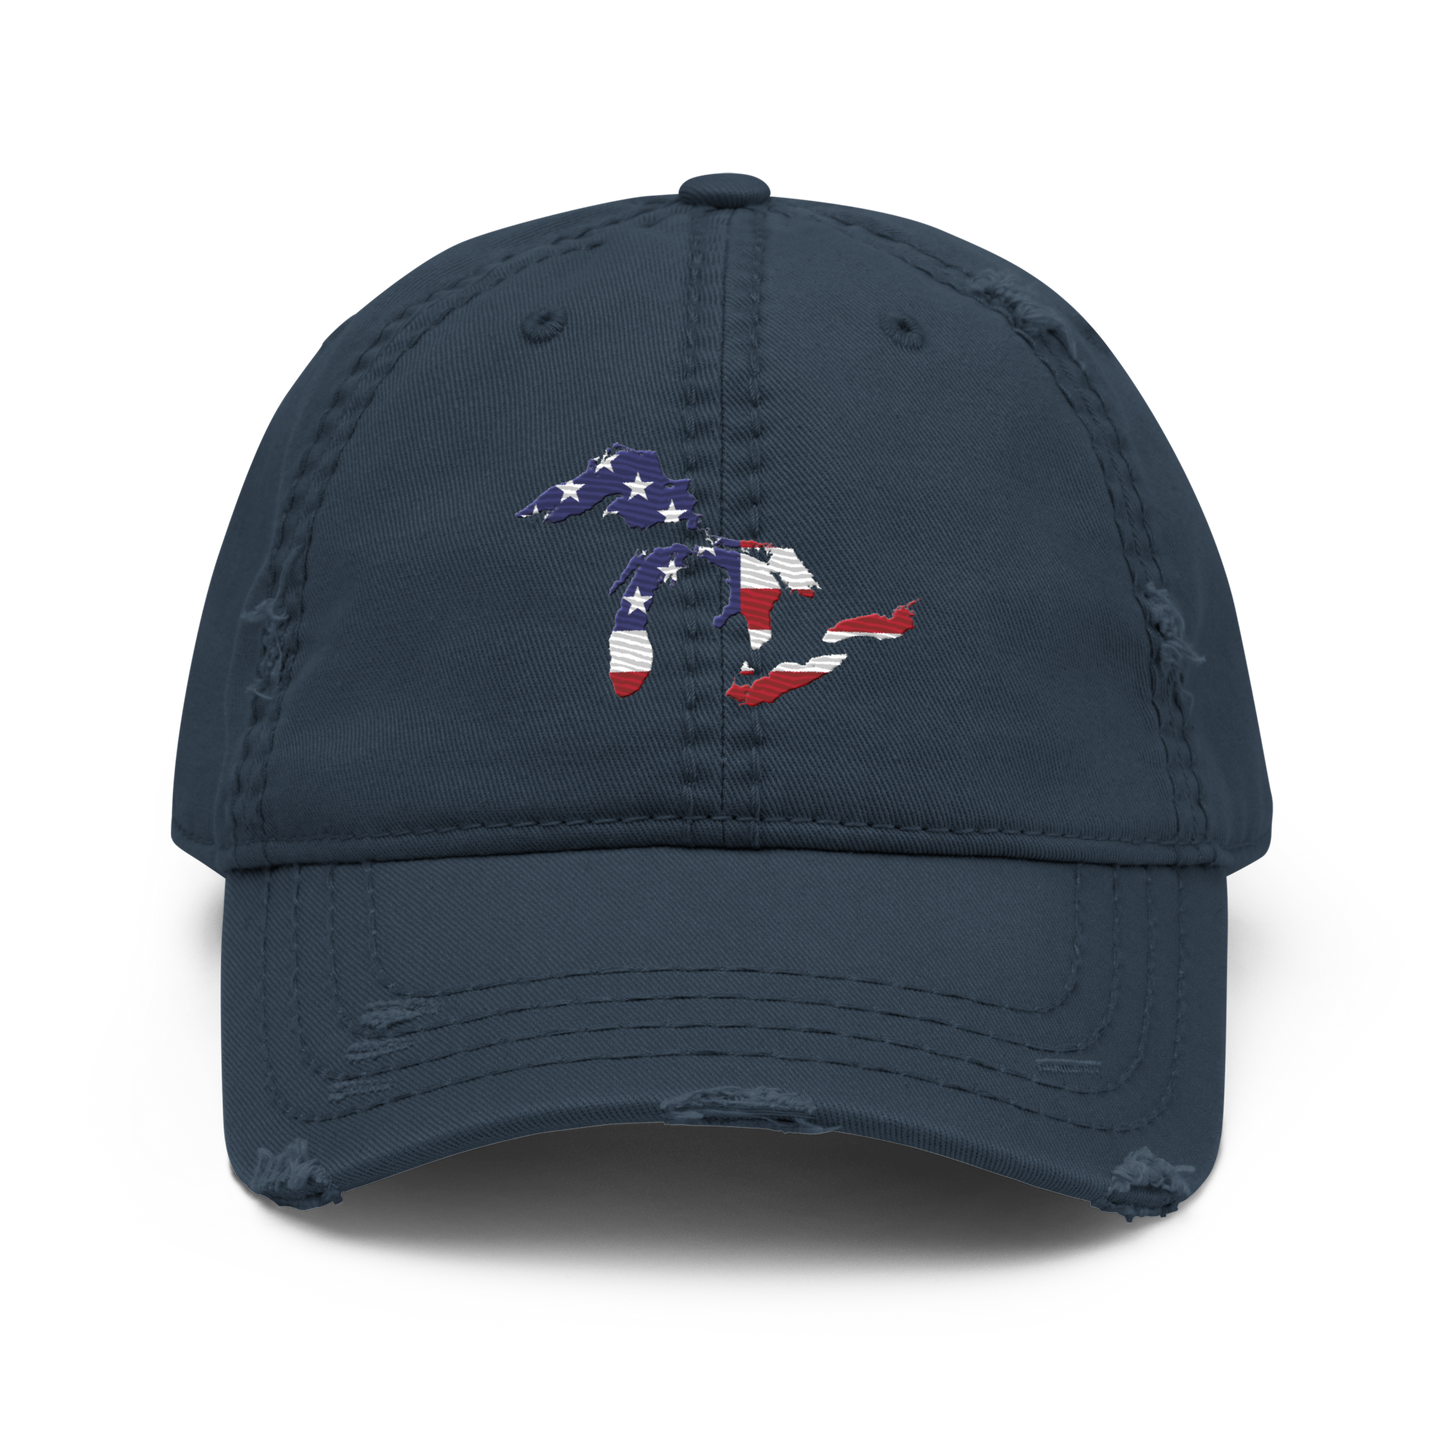 Great Lakes Distressed Dad Hat (Patriotic Edition)